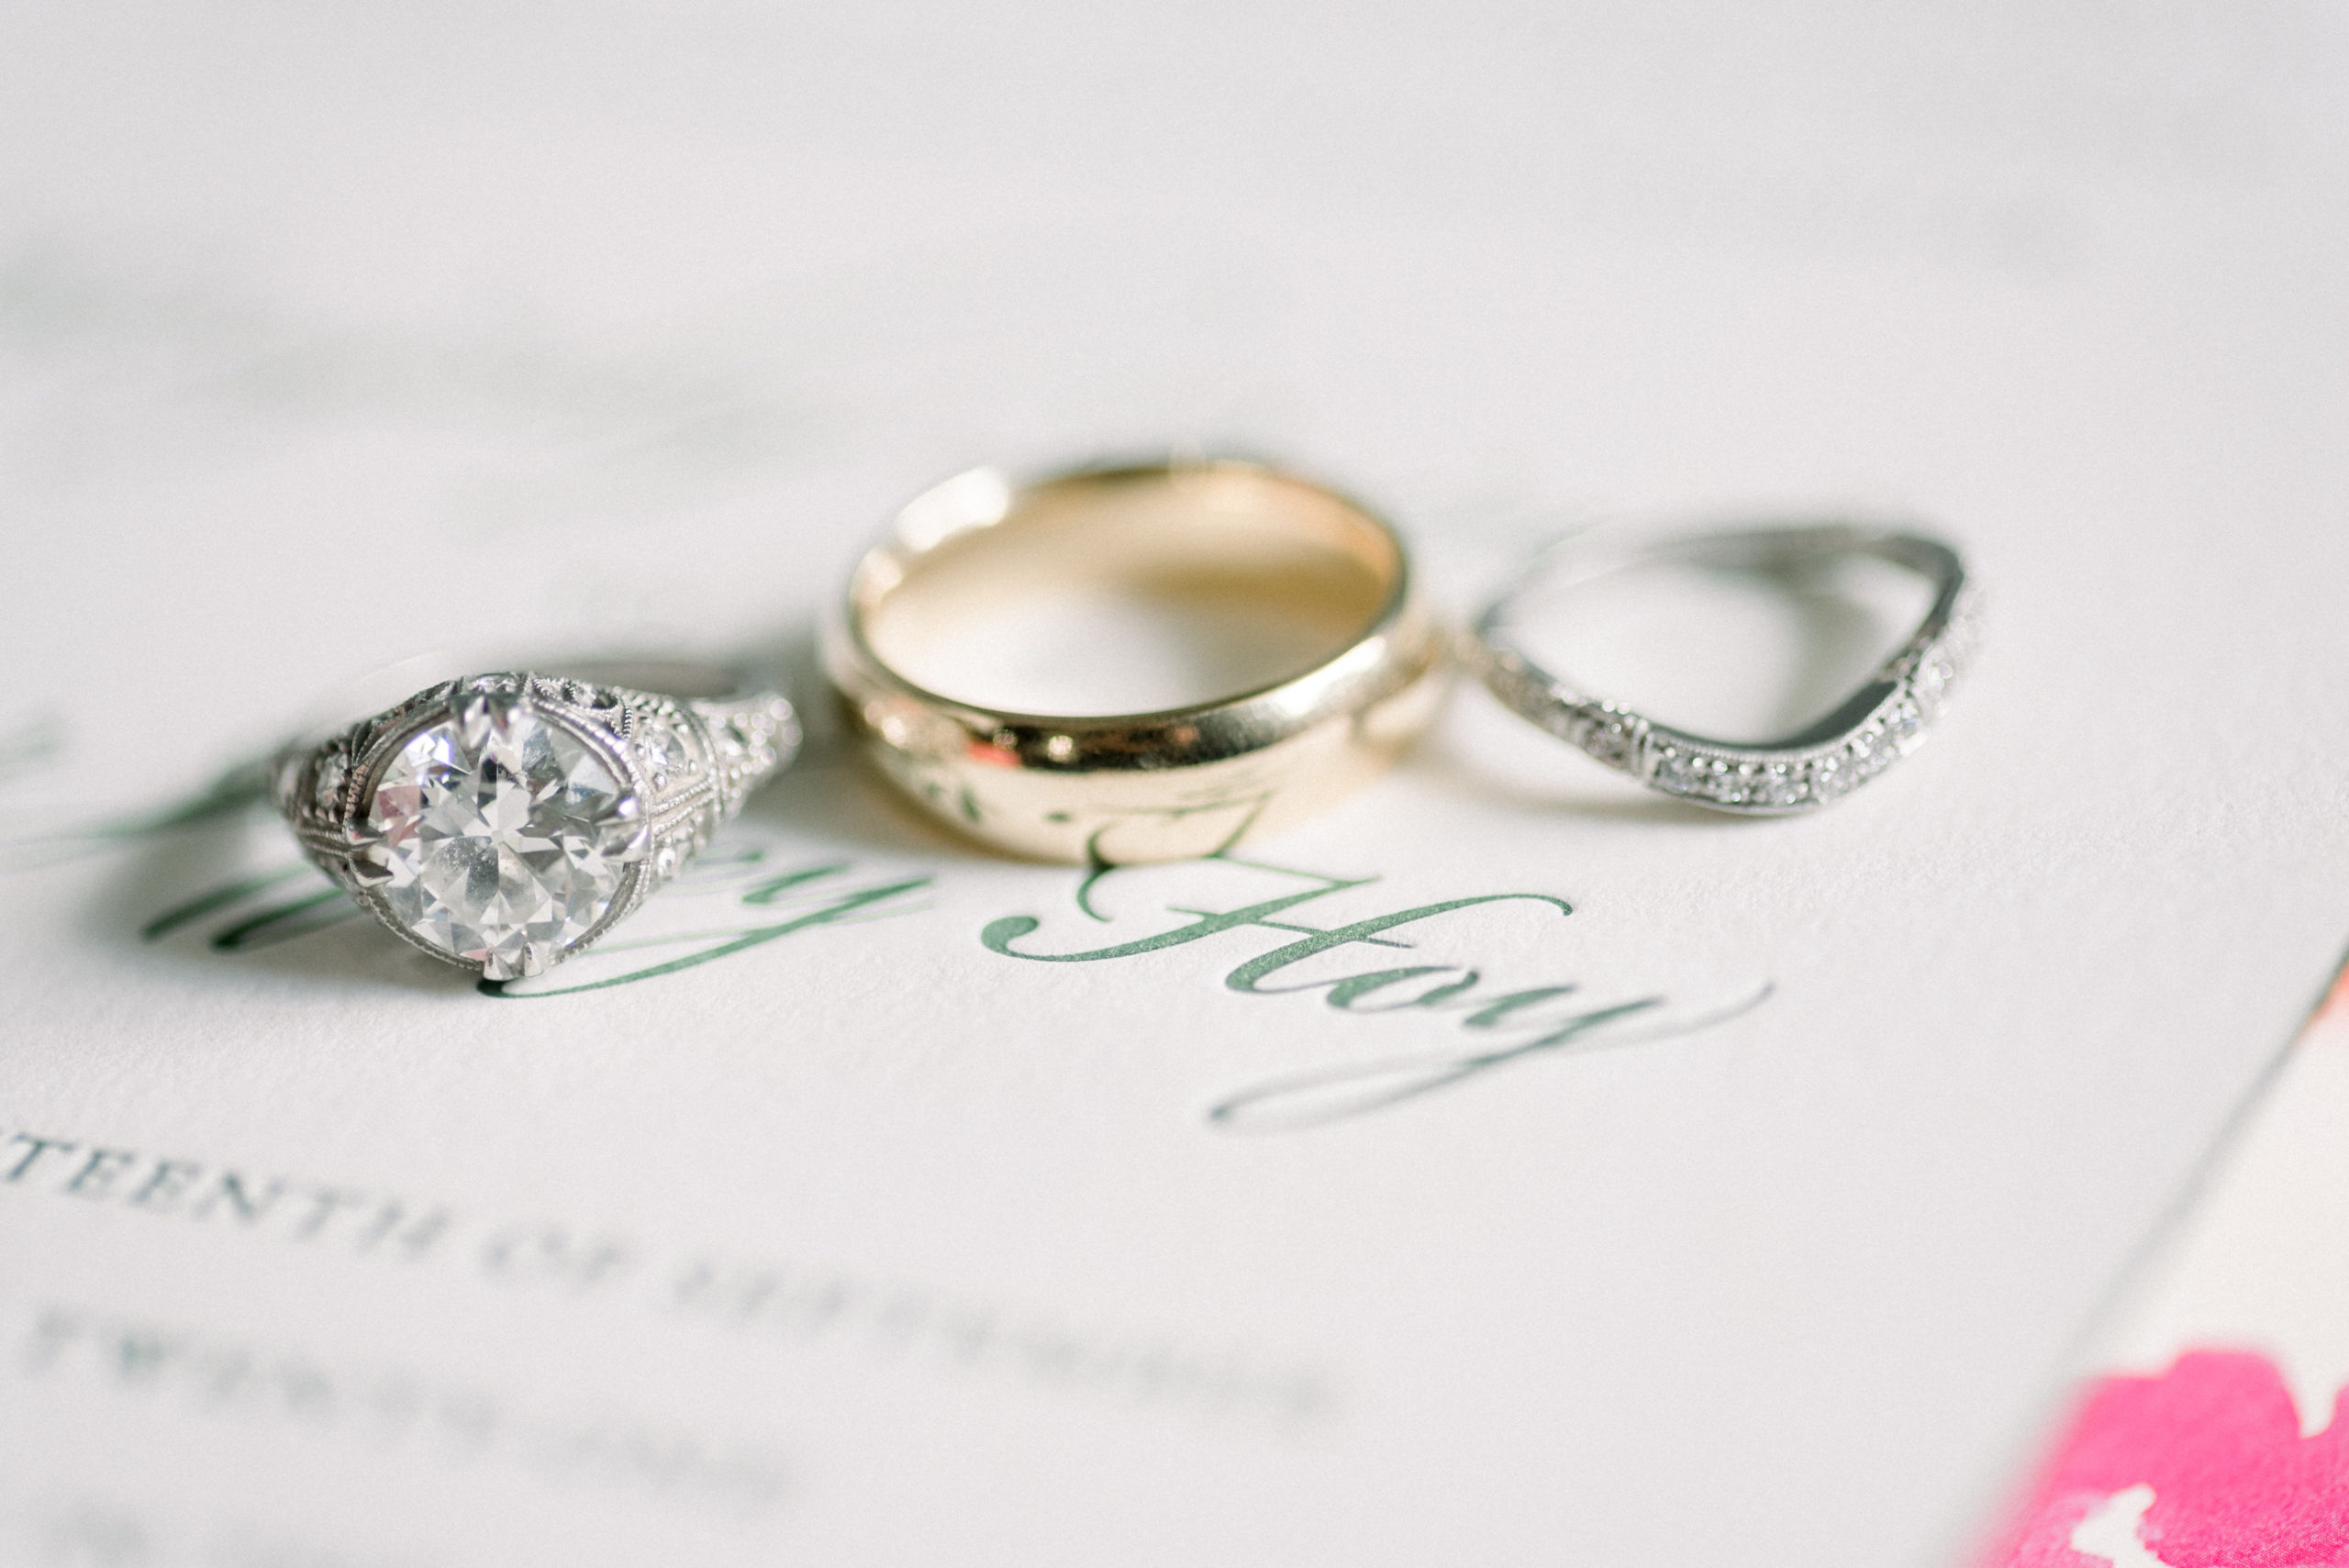 close up shot of engagement ring, weddings bands on wedding invitation